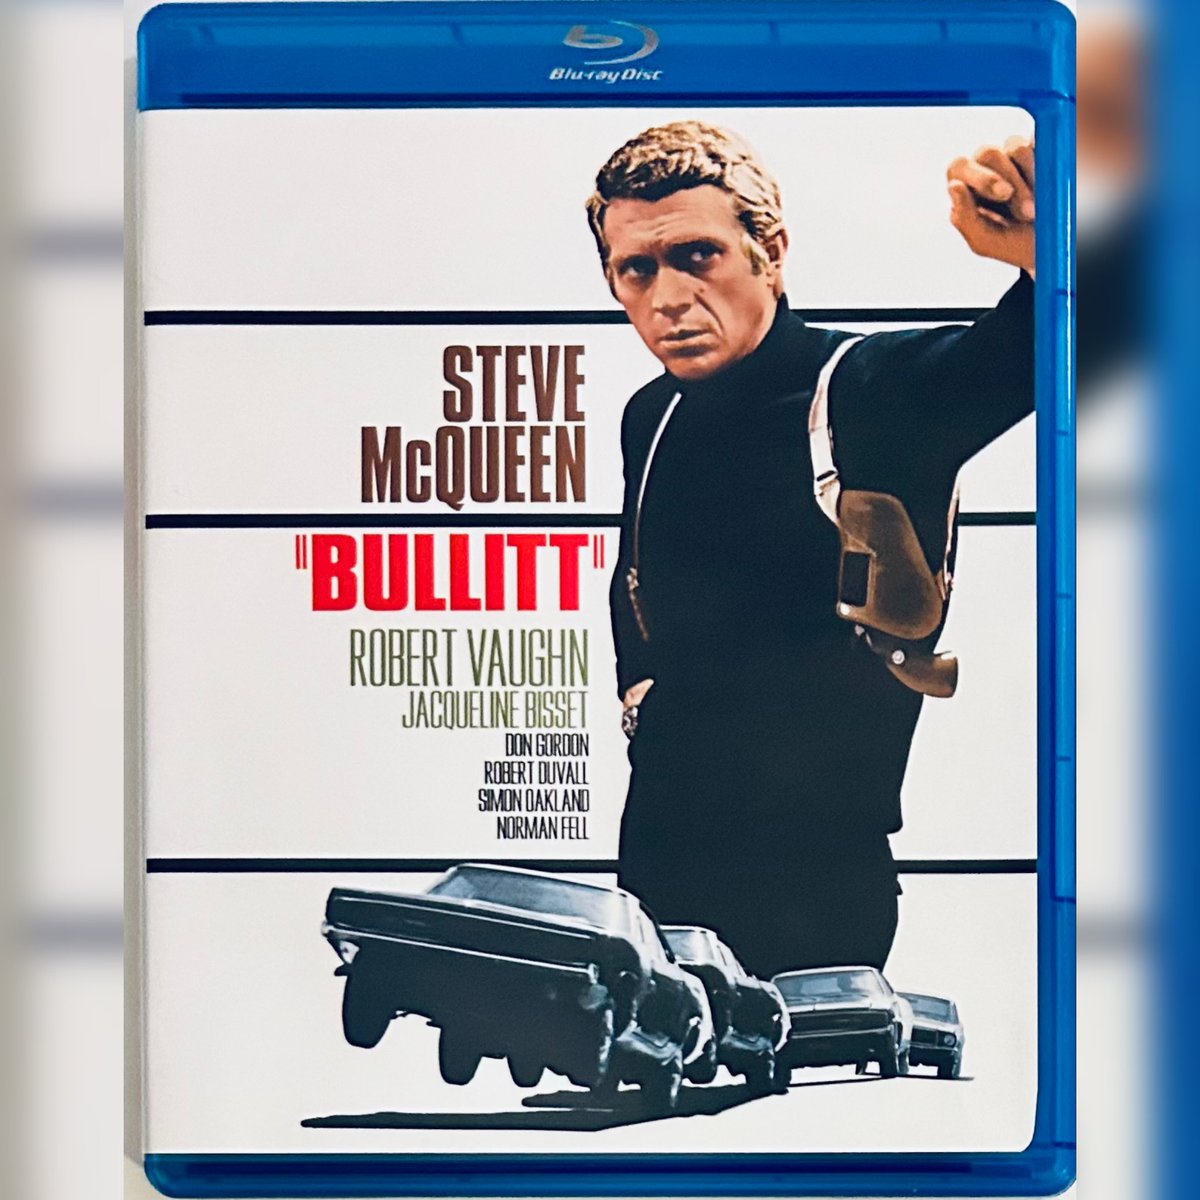 #NewArrival! Bullitt (Blu-ray, 2007) Action/Thriller Steve McQueen Warner Bros. 1968 

rareflicksplus.com/all-products/o…

#Bullitt #Action #Thriller #SteveMcQueen #WarnerBros. #60s #60sMovies #Bluray #Blurays #PhysicalMedia #BluRayStore #ThrillerMovies #ActionMovies